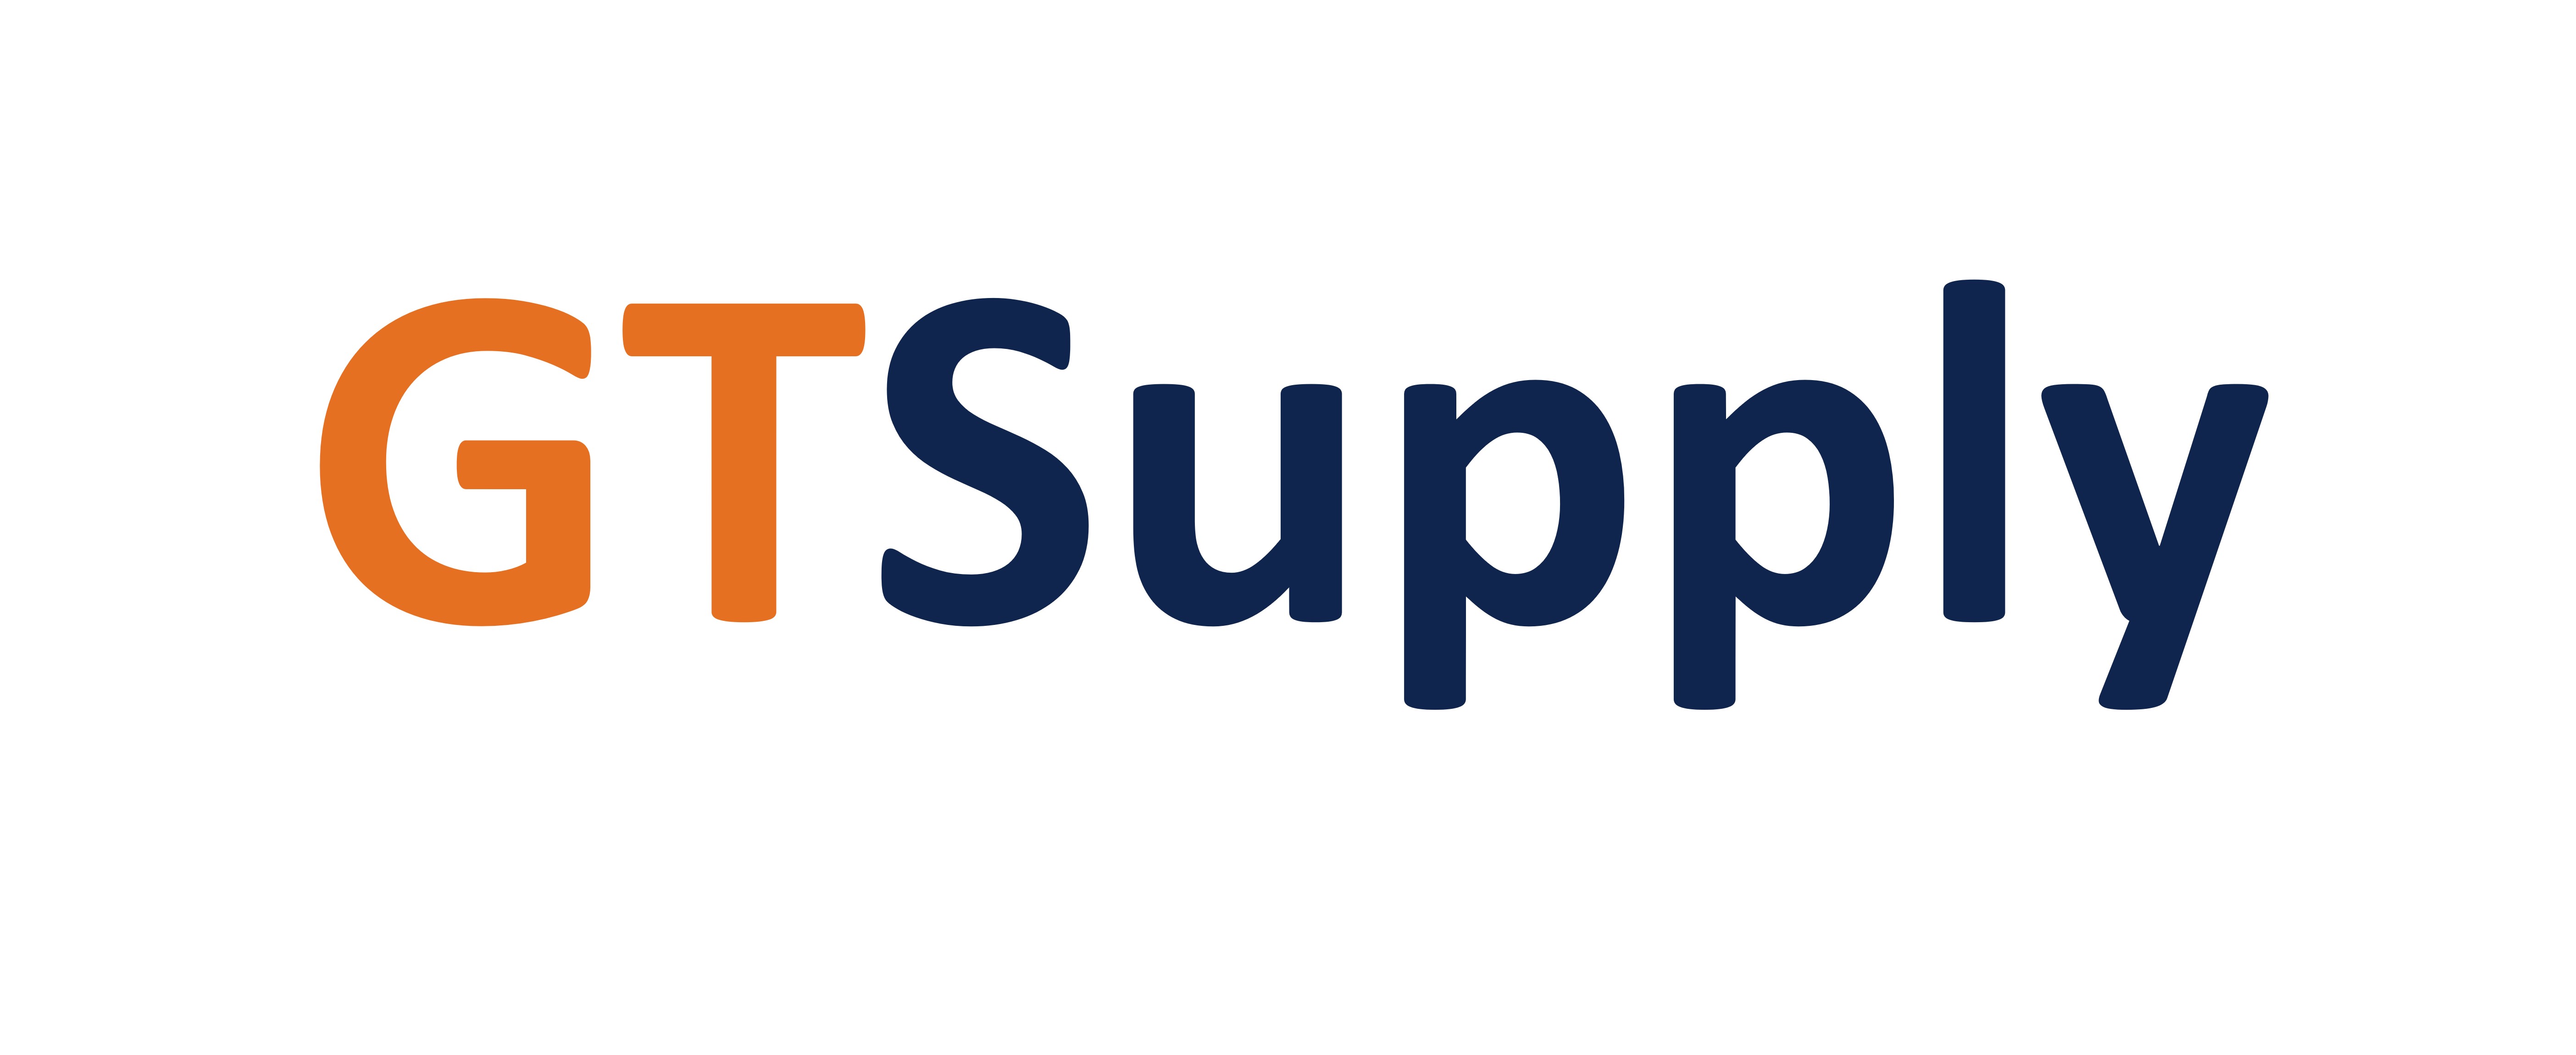 GTSupply logo-1